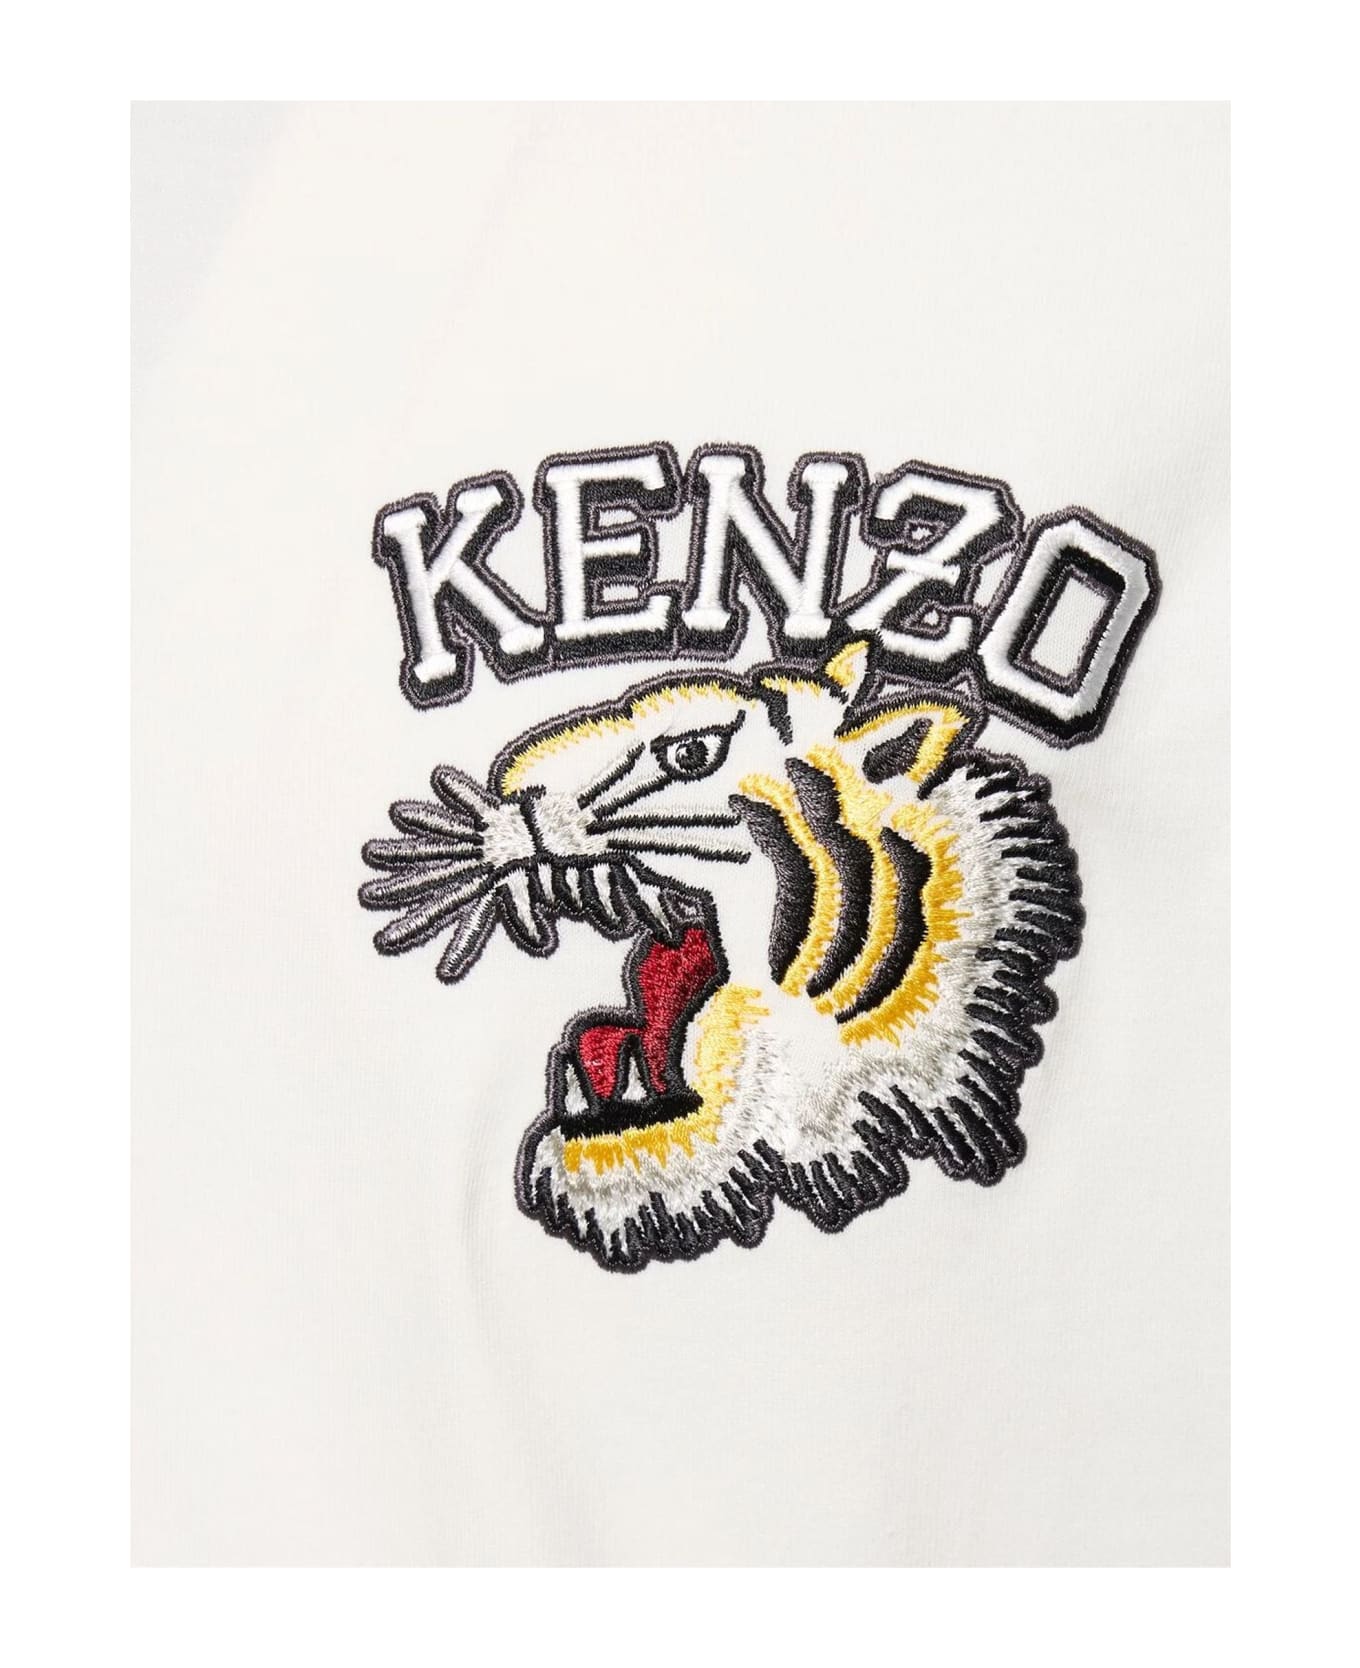 Kenzo T-shirts And Polos White - White